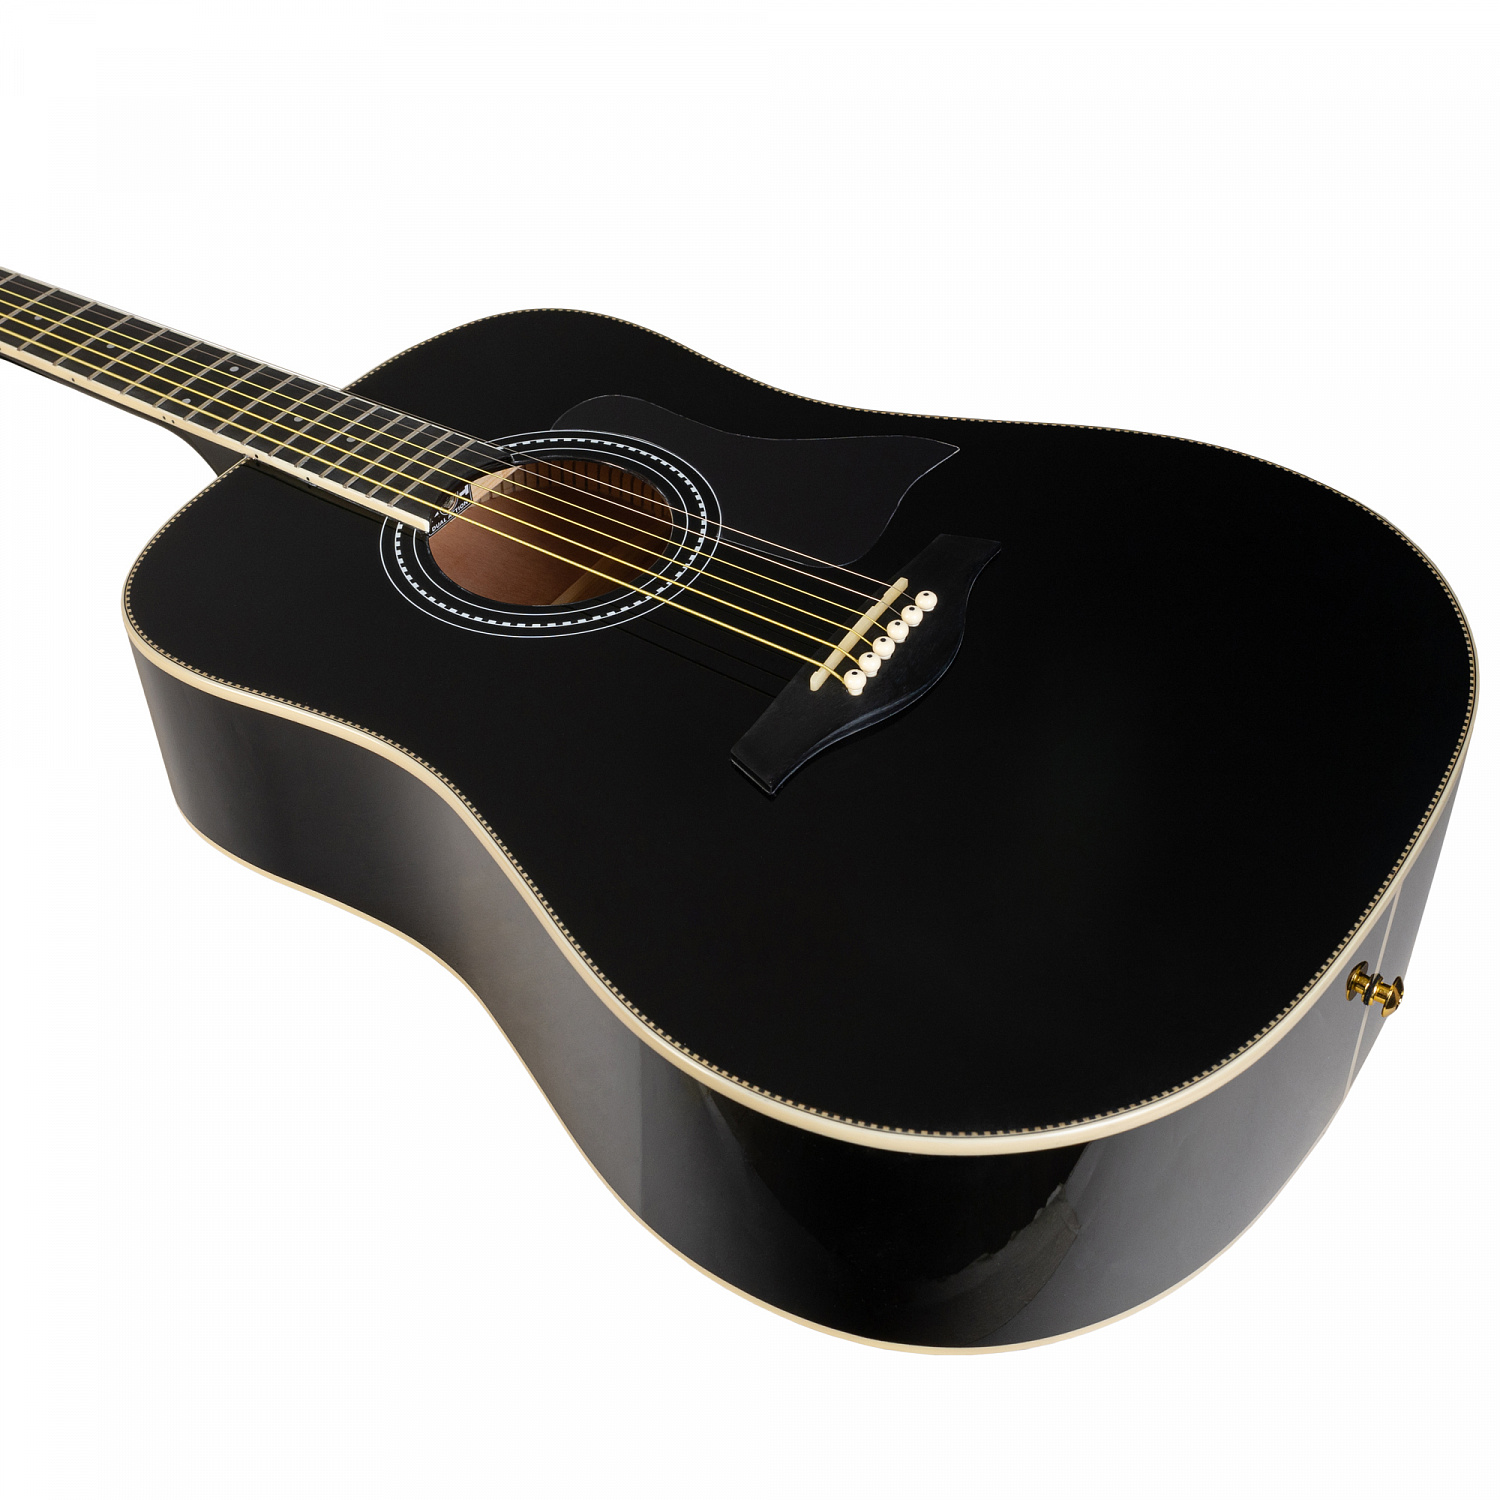 Rockdale Aurora D7 BK Gloss акустическая гитара дредноут, цвет черный, глянцевое покрытие